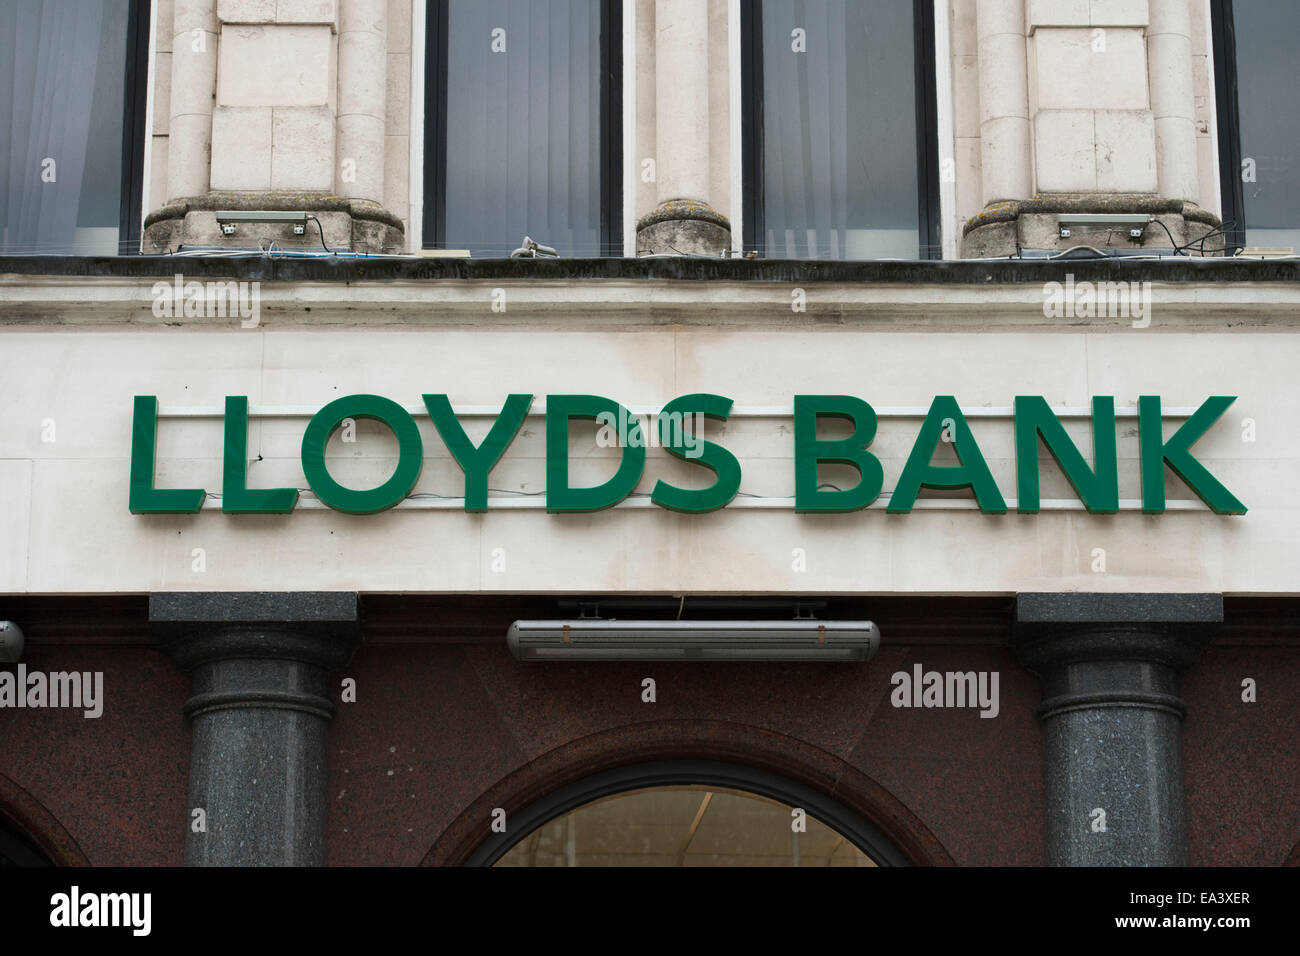 Lloyds Bank sign. Stock Photo